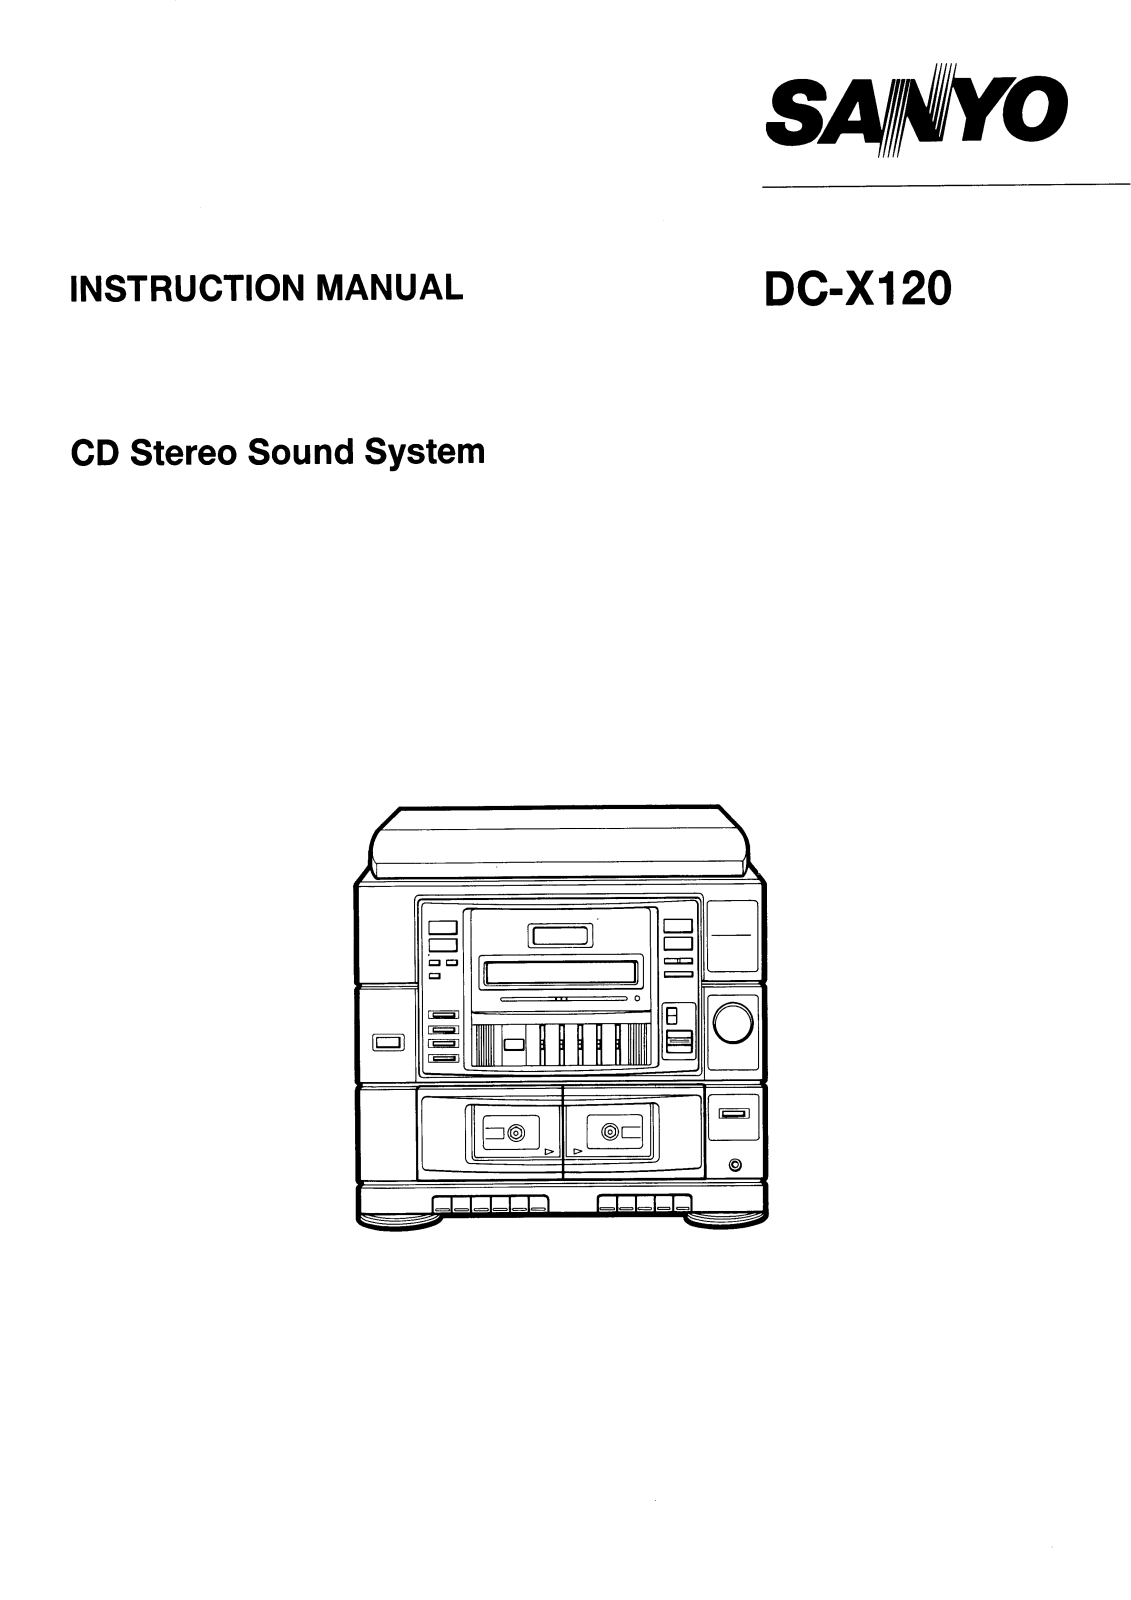 Sanyo DC-X120 Instruction Manual